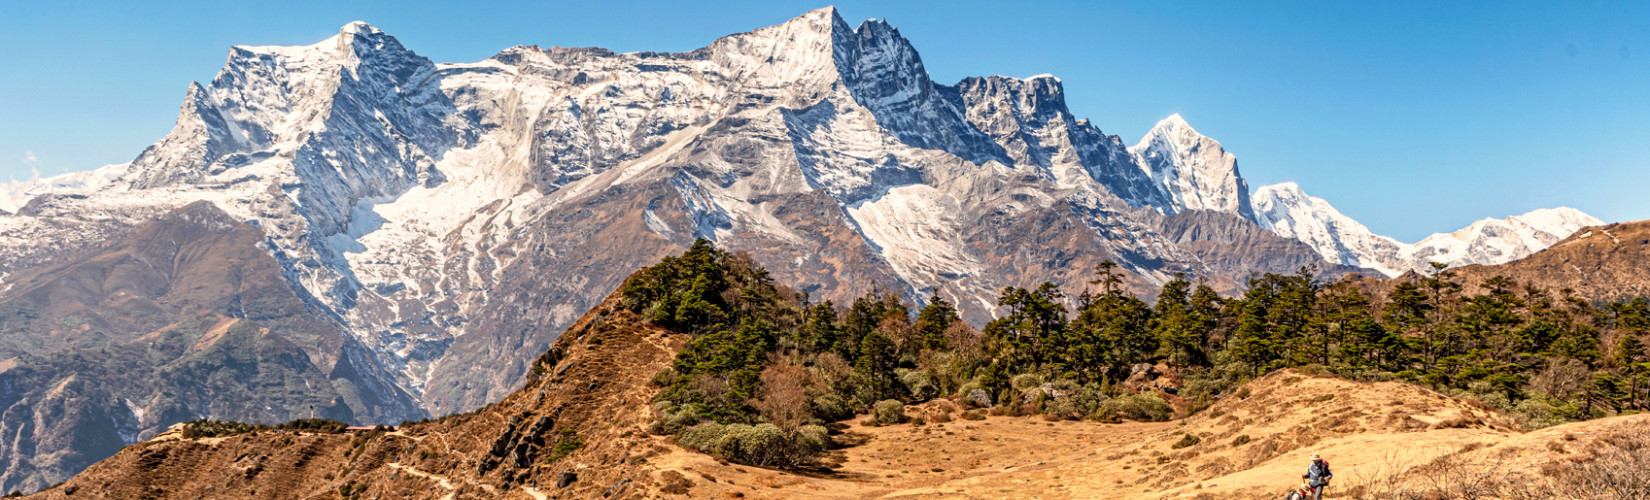 Autumn Trekking in Nepal: The Best Season to Trek in Nepal